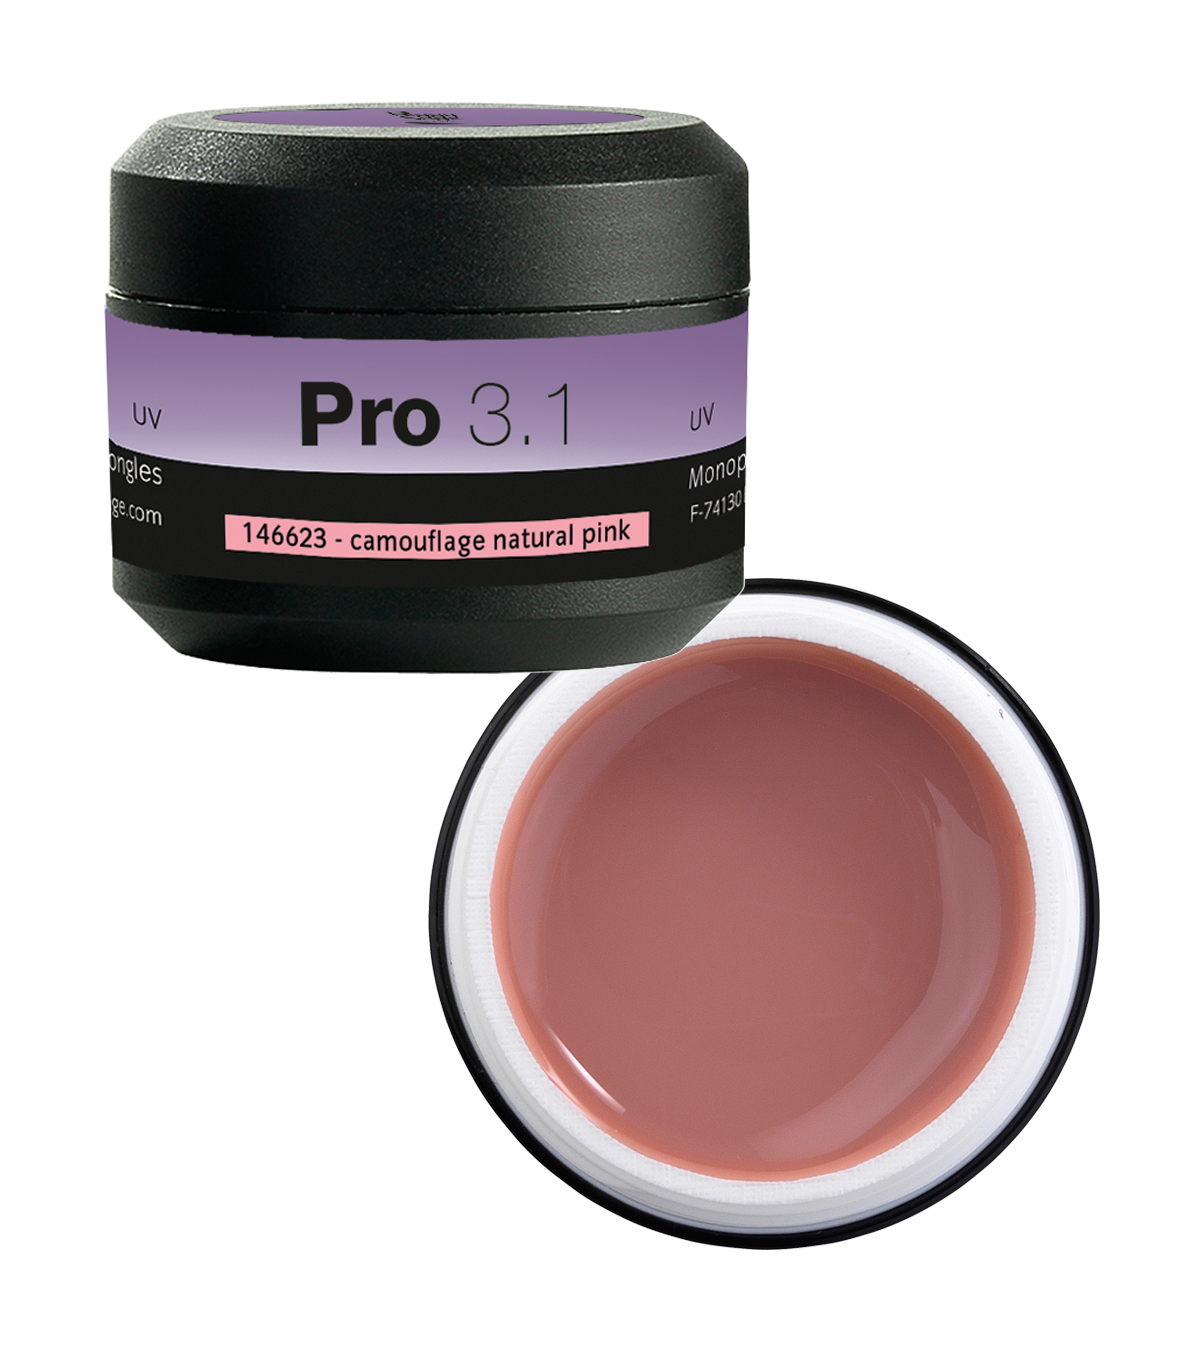 PS Pro 3.1 UV-Aufbaugel camouflage natural pink